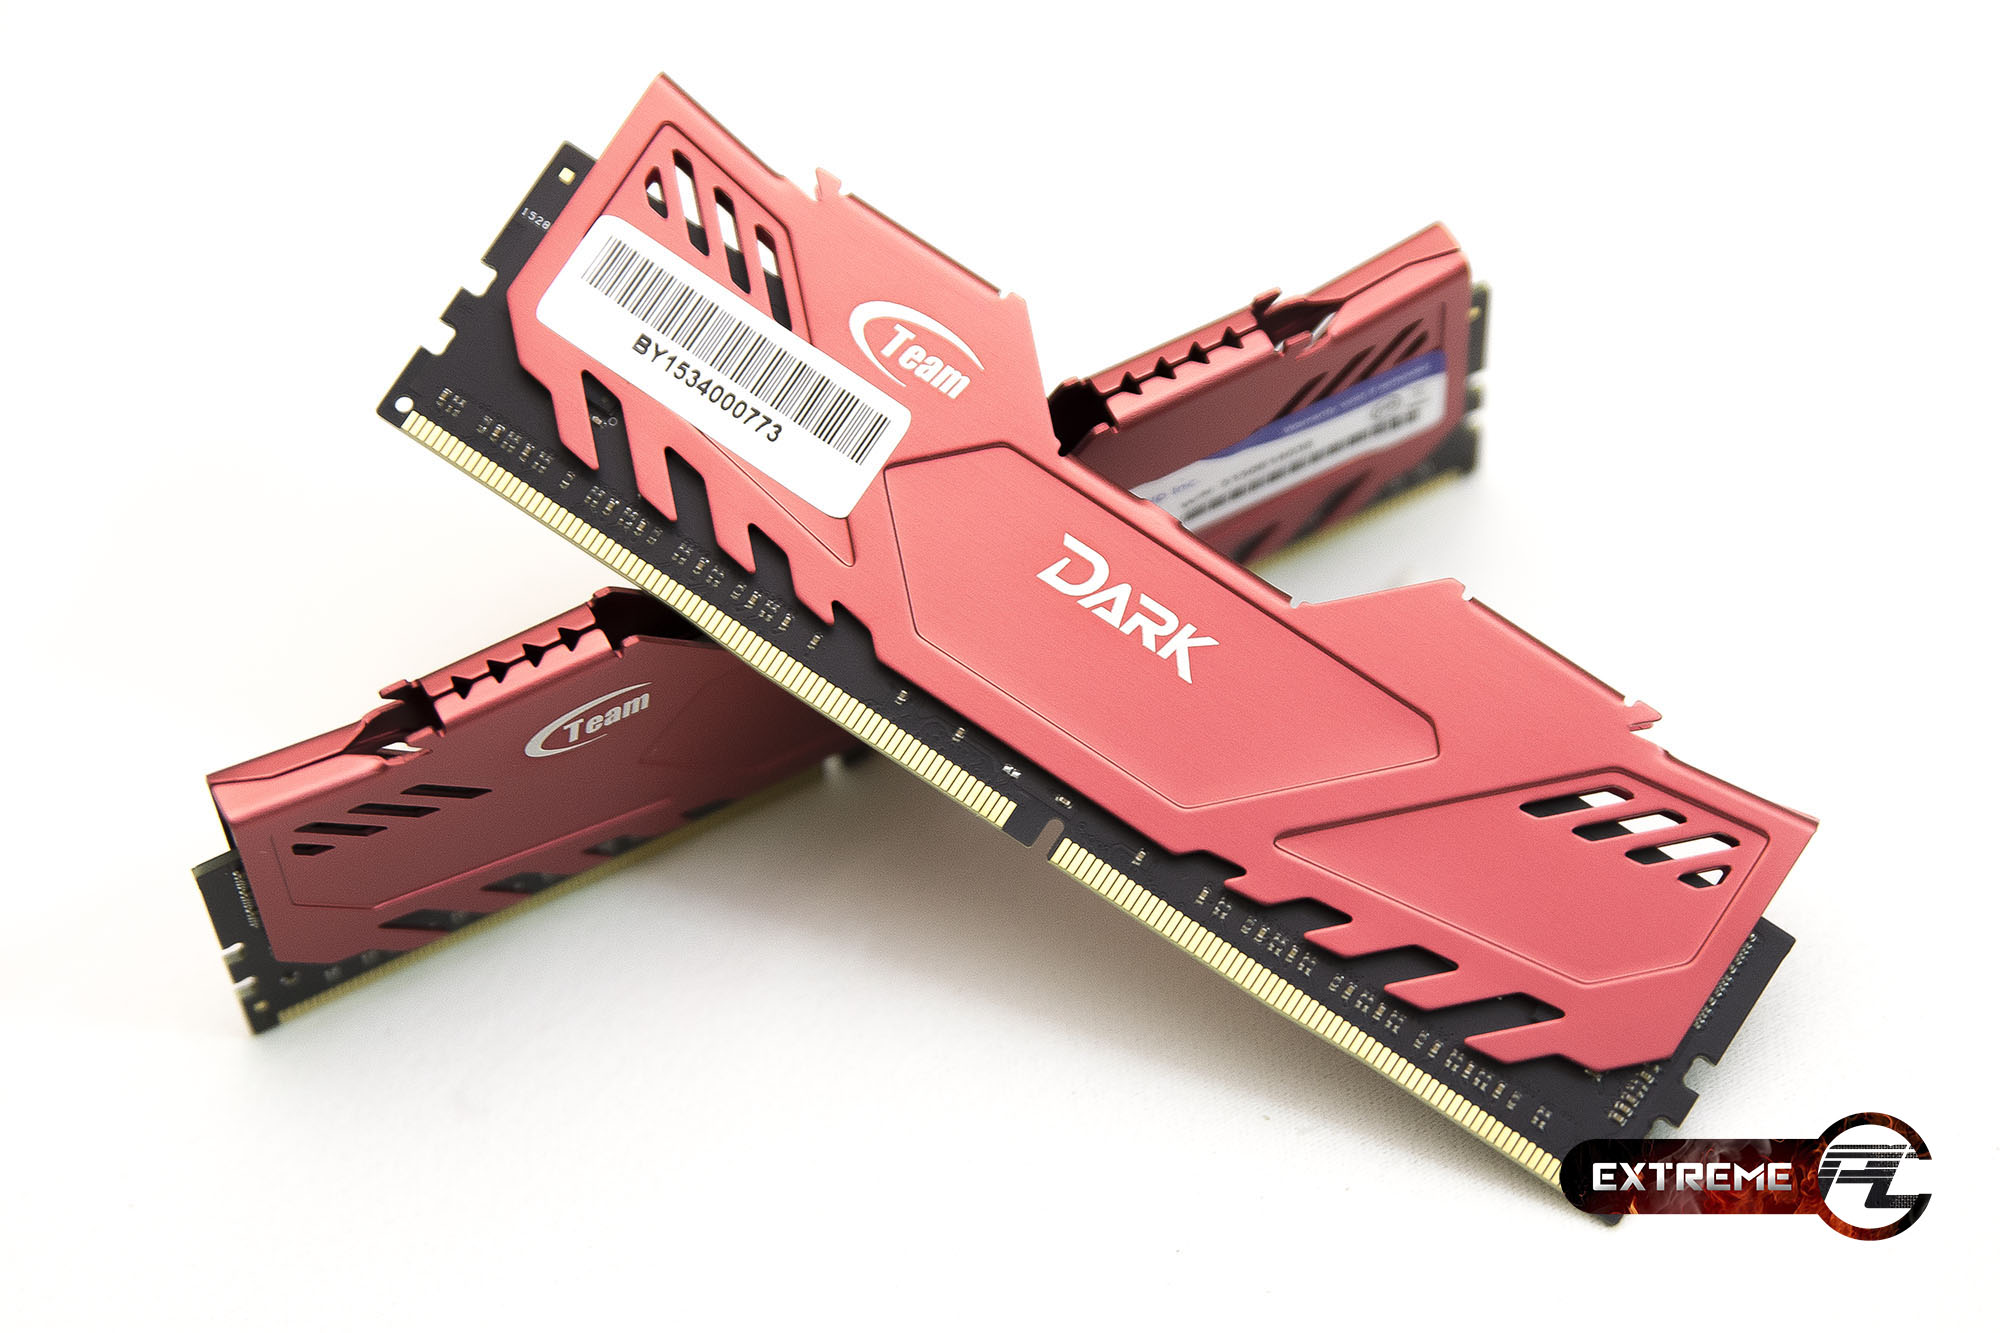 Review: Teamgroup DARK DDR 4 3000 MHz คุณภาพความแรง กับราคาสบายกระเป๋า